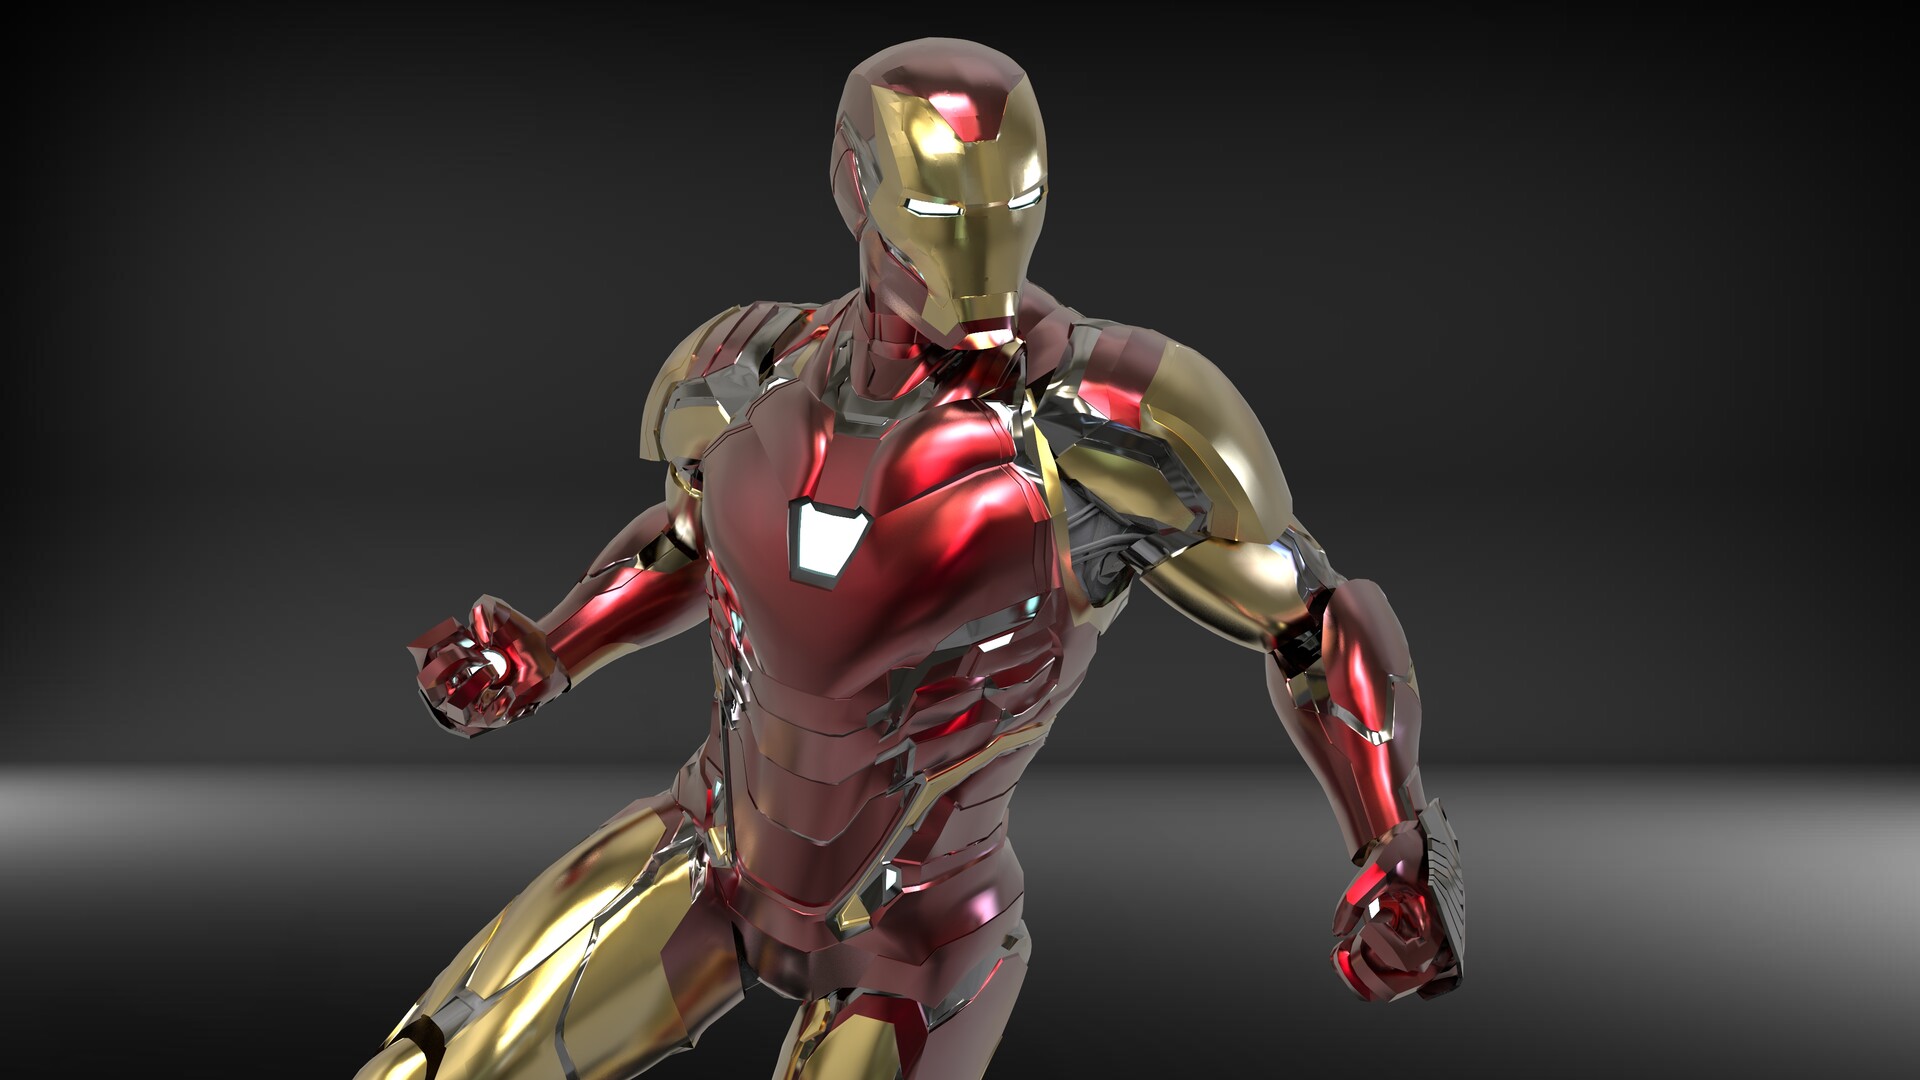 Iron-Man Iconic Pose by 9aFilms on DeviantArt